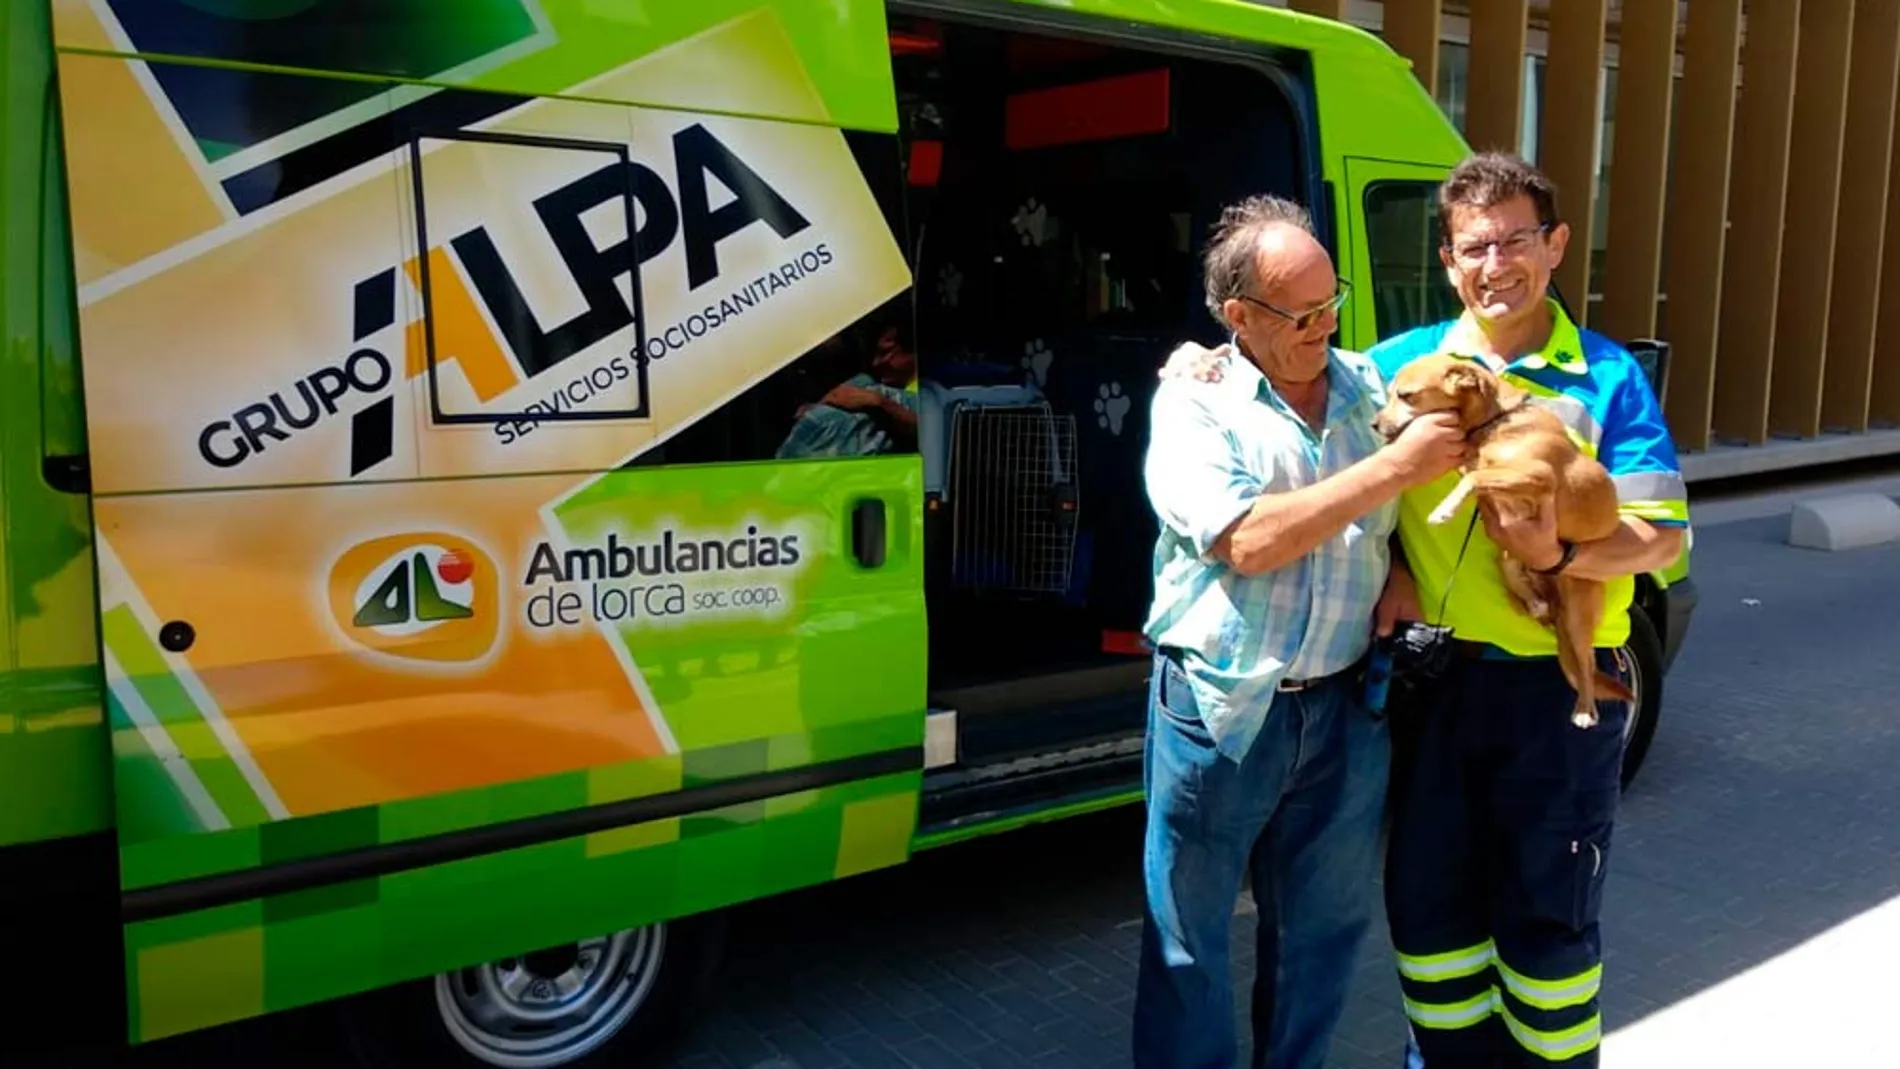 La ambulancia gratuita de mascotas, en riesgo de desaparecer